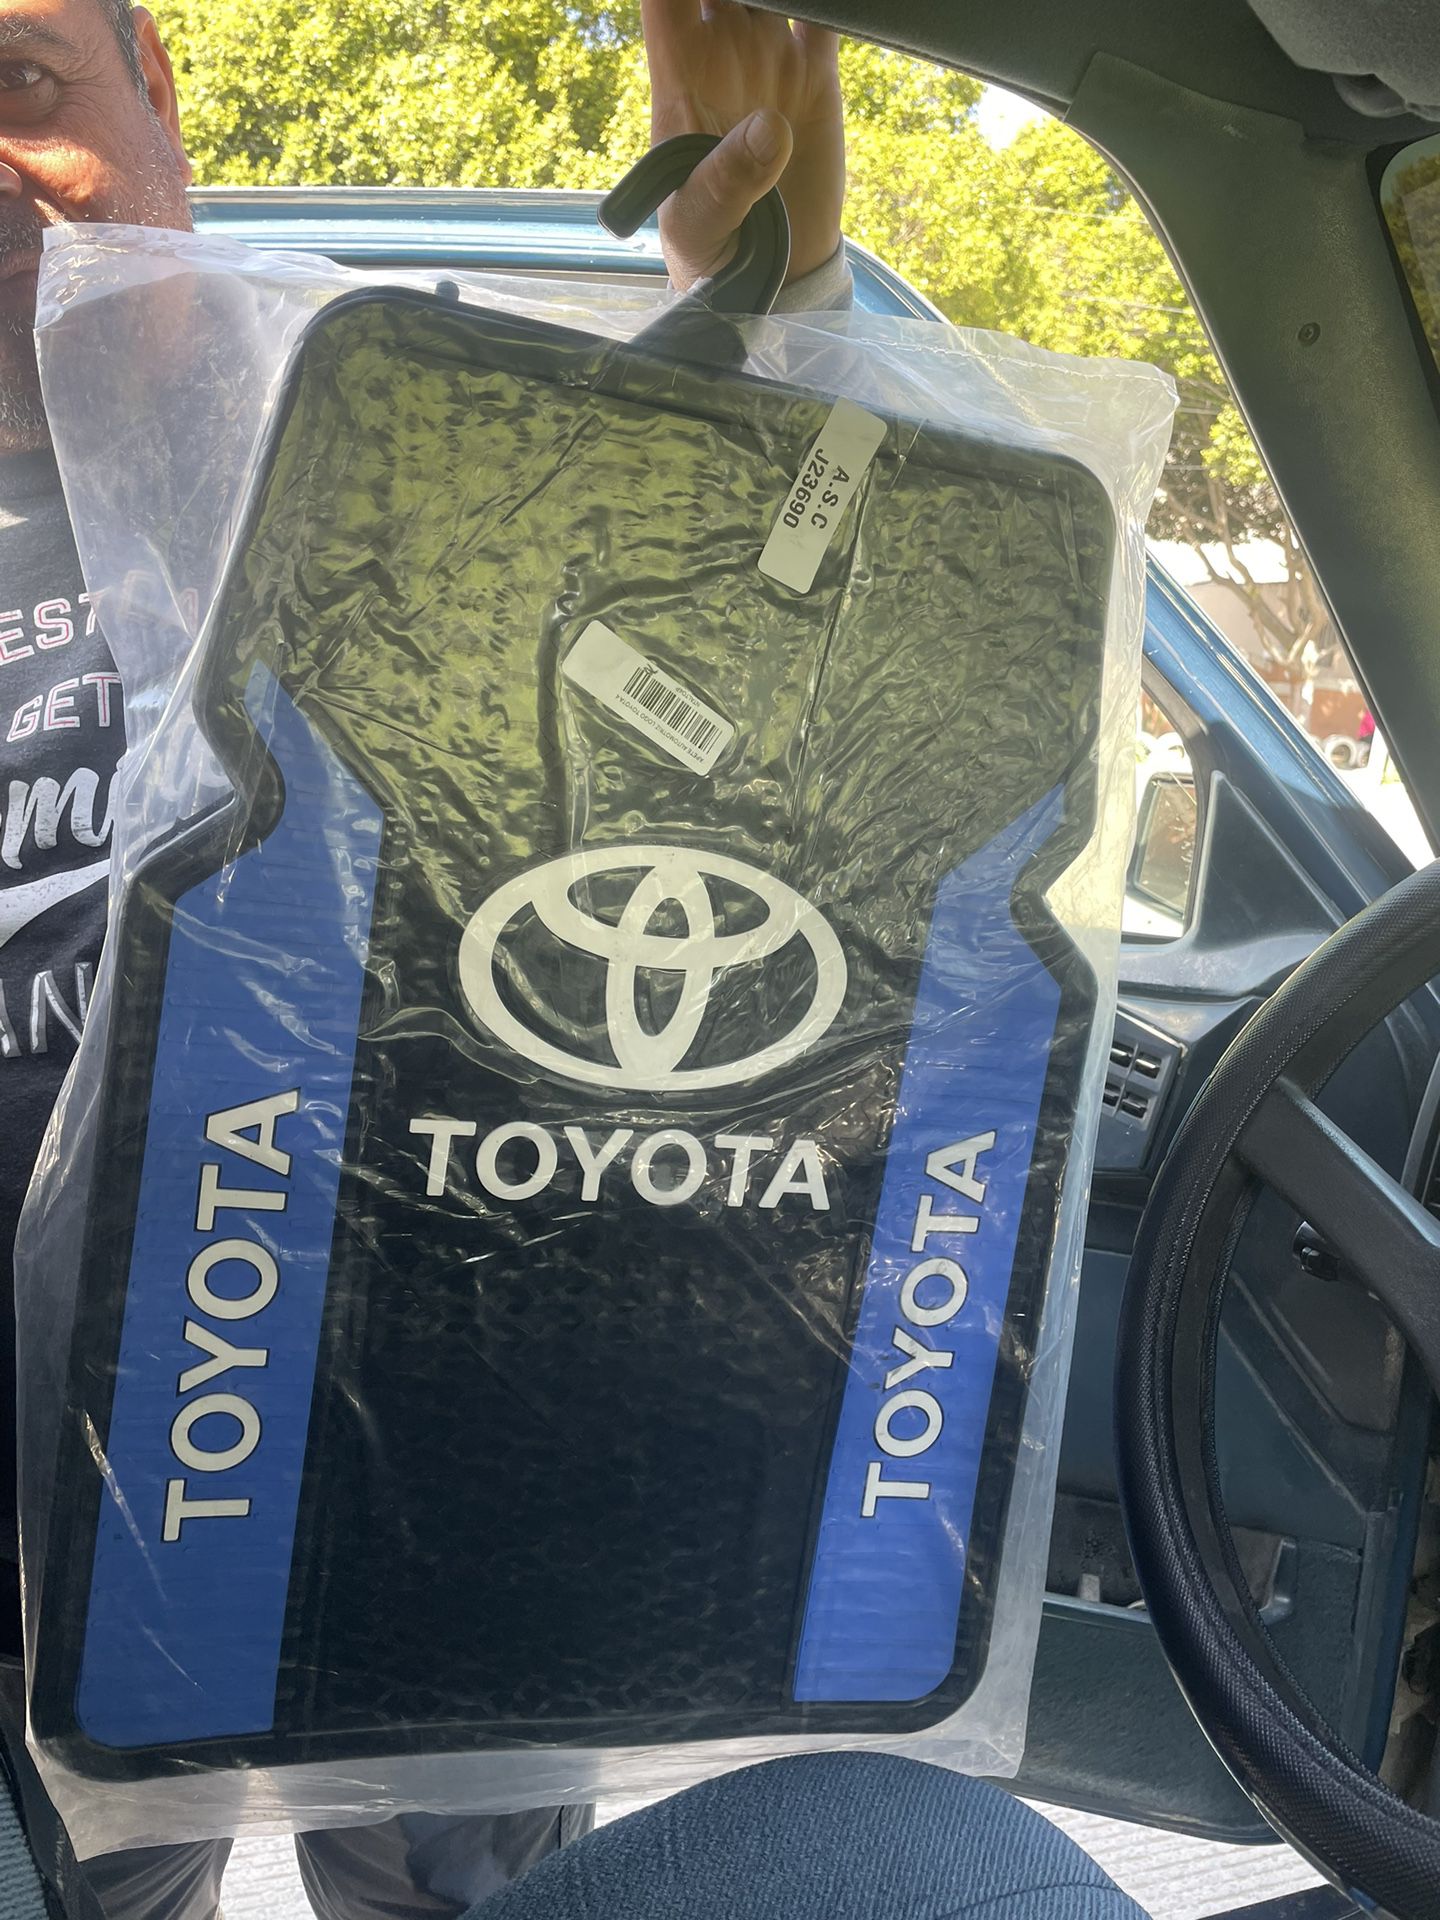 Toyota Floor Mats Rubber 